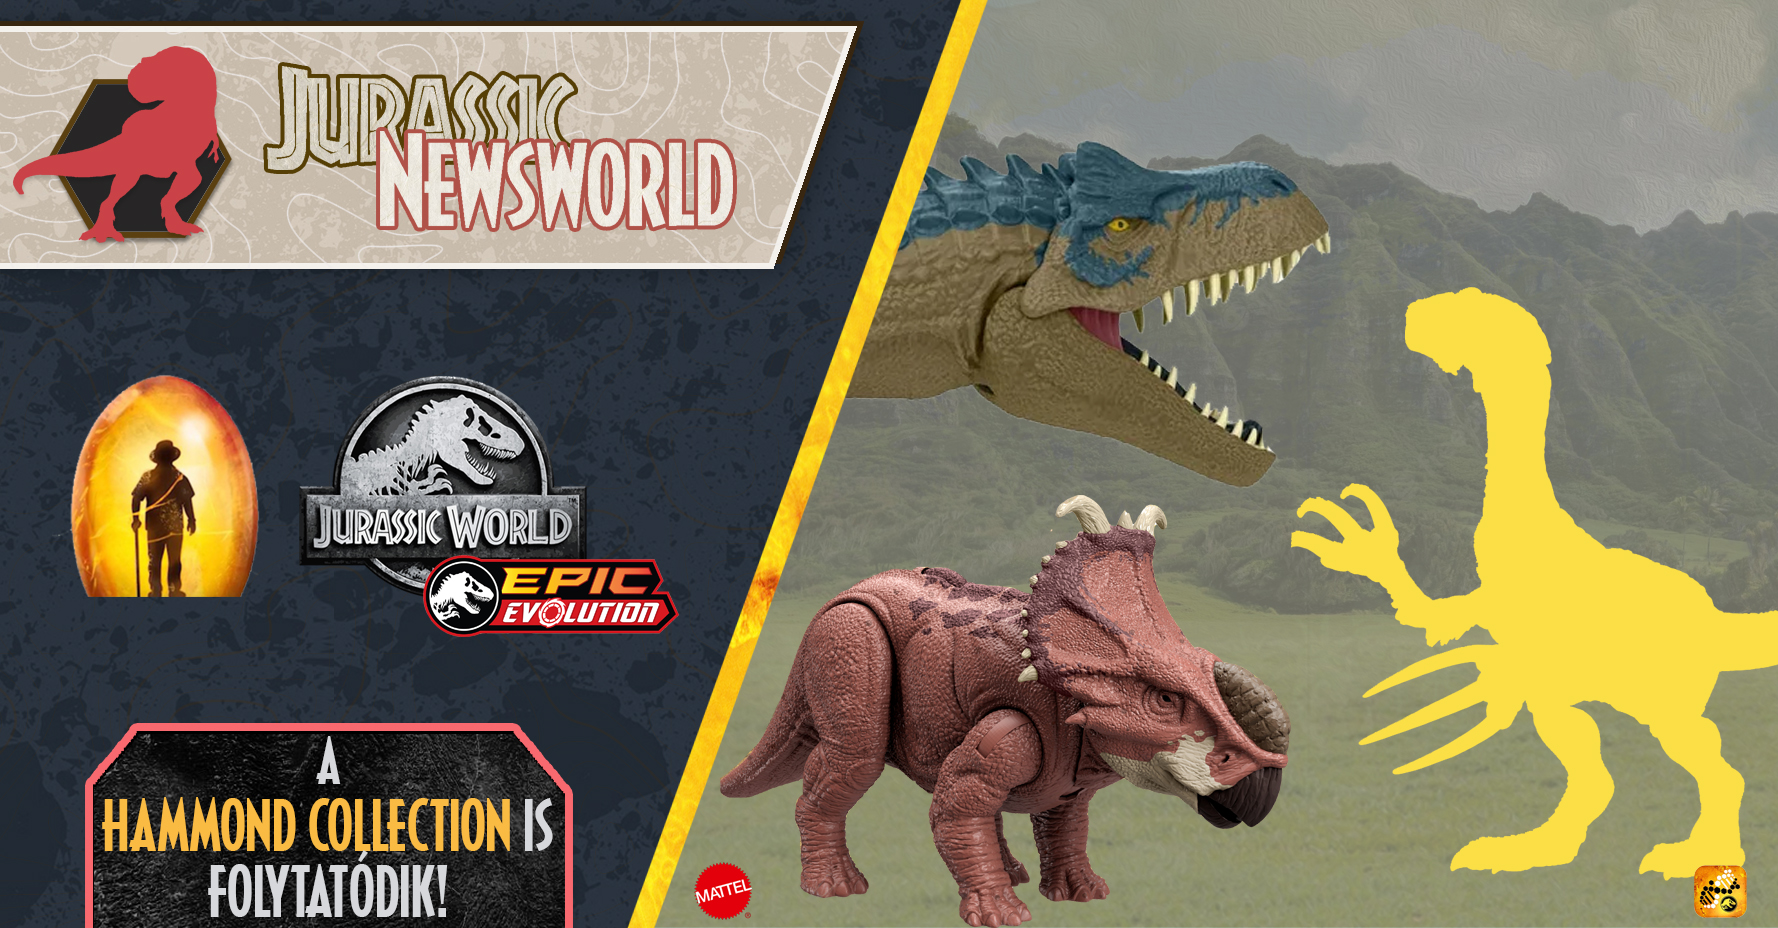 Jurassic Newsworld: A Hammond Collection is folytatódik!